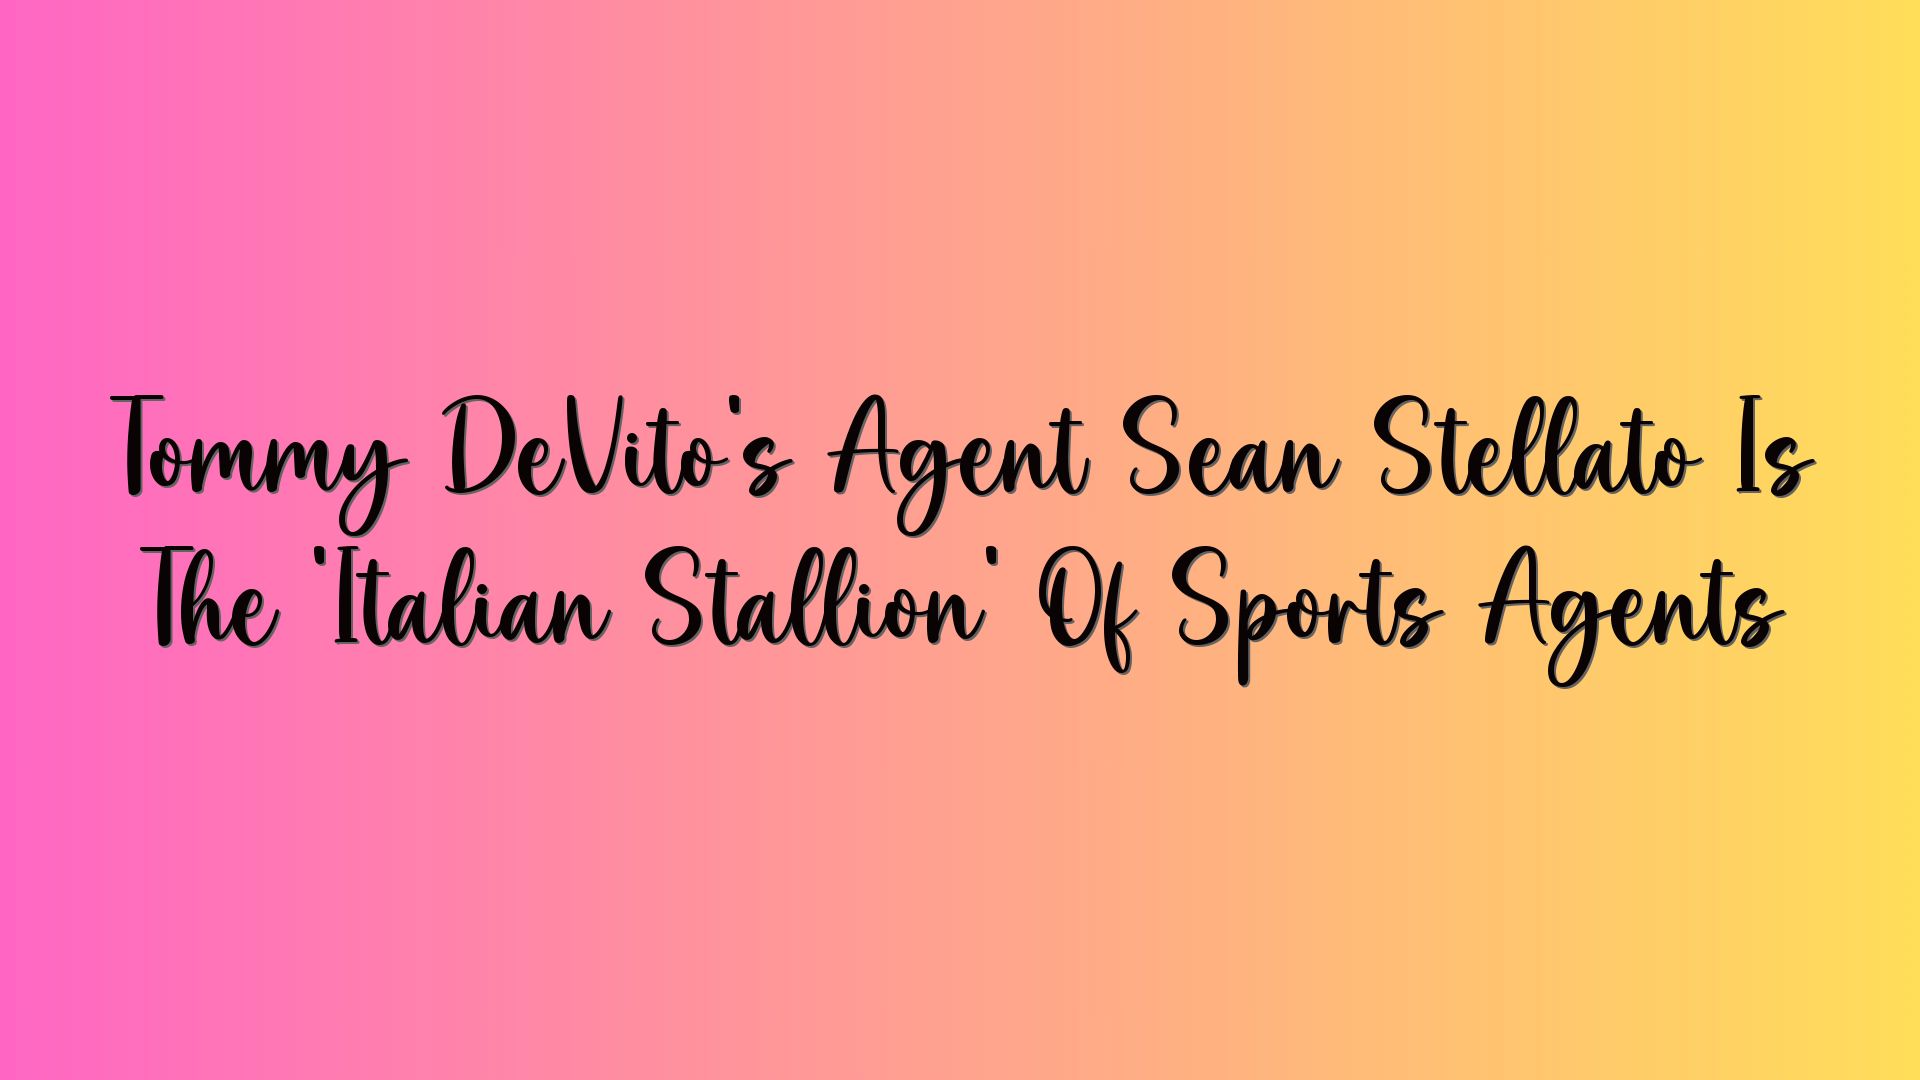 Tommy DeVito’s Agent Sean Stellato Is The ‘Italian Stallion’ Of Sports Agents